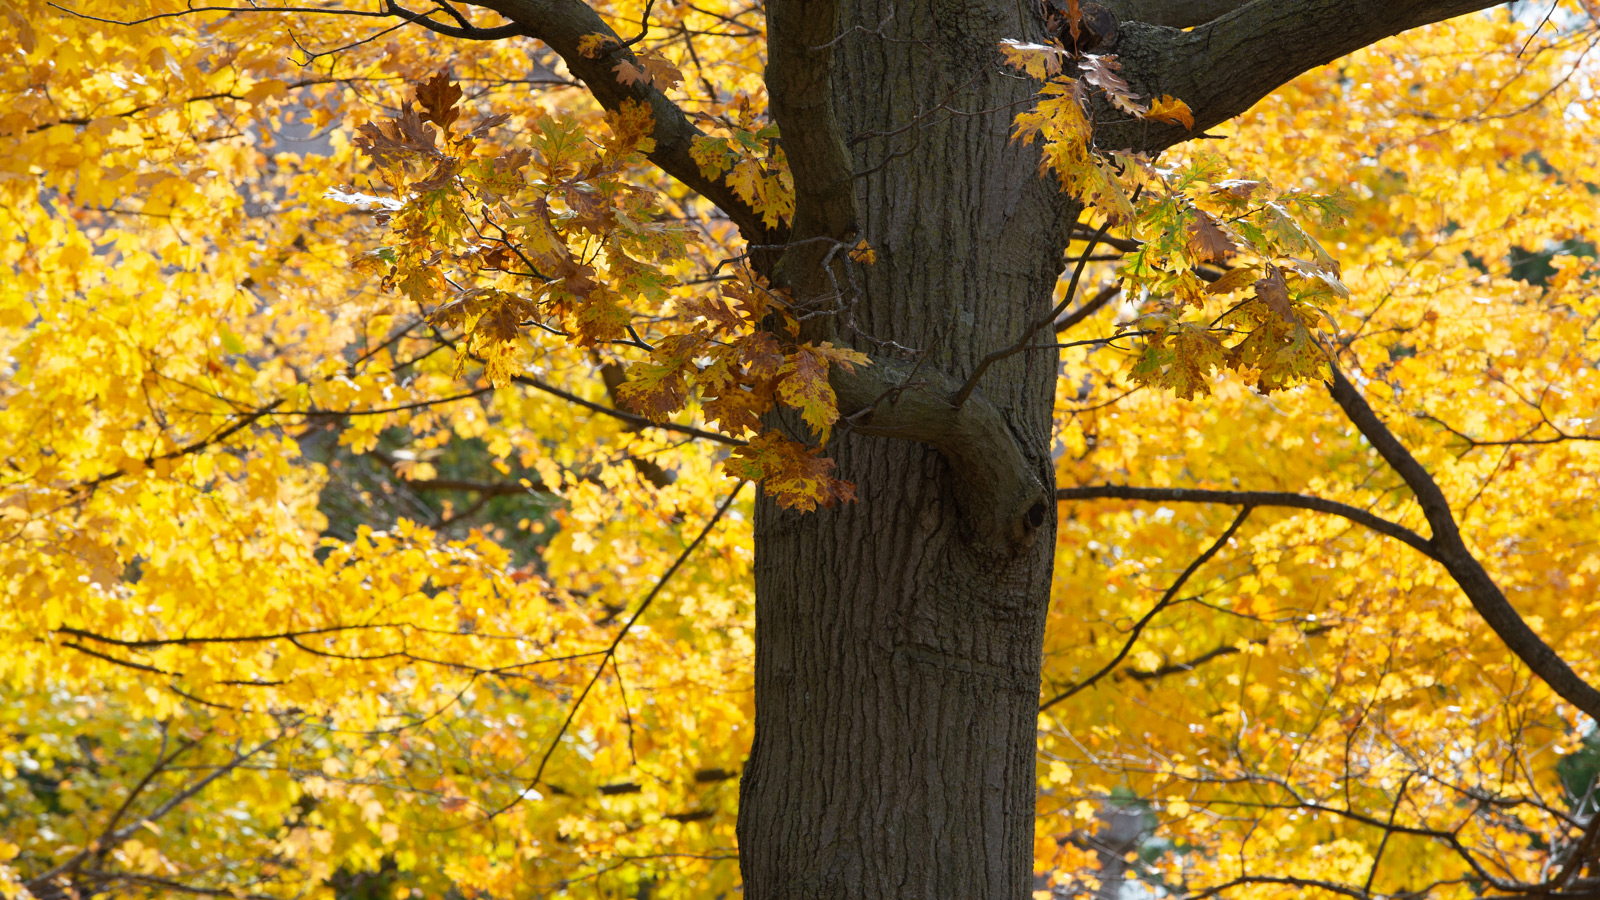 Shumard Oak during the fall